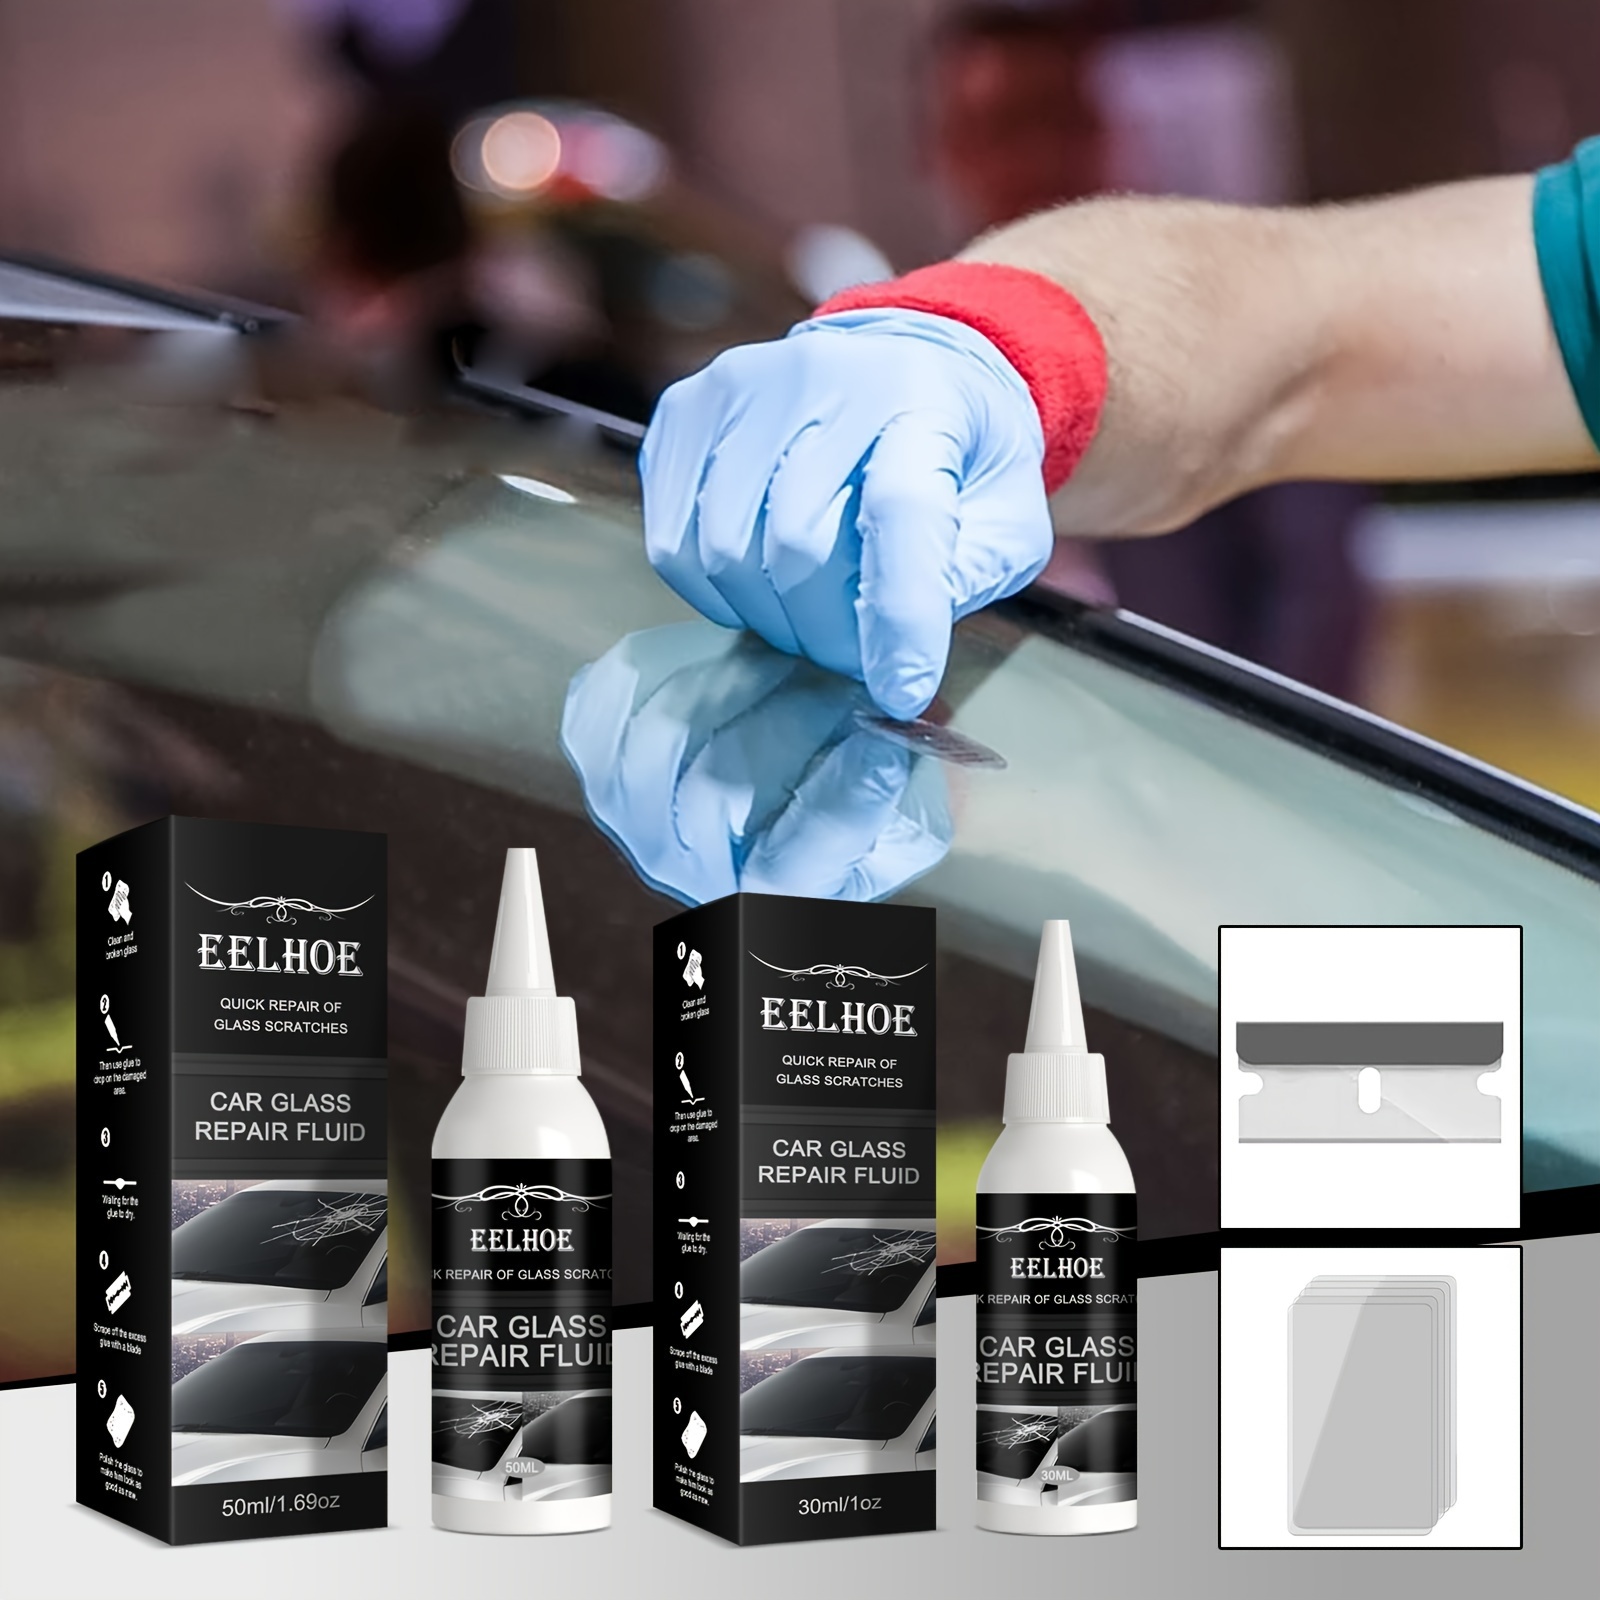 Windshield Cleaner Tool Car Cleaning Kit Supplies Windshield Wiper Fluid  Window